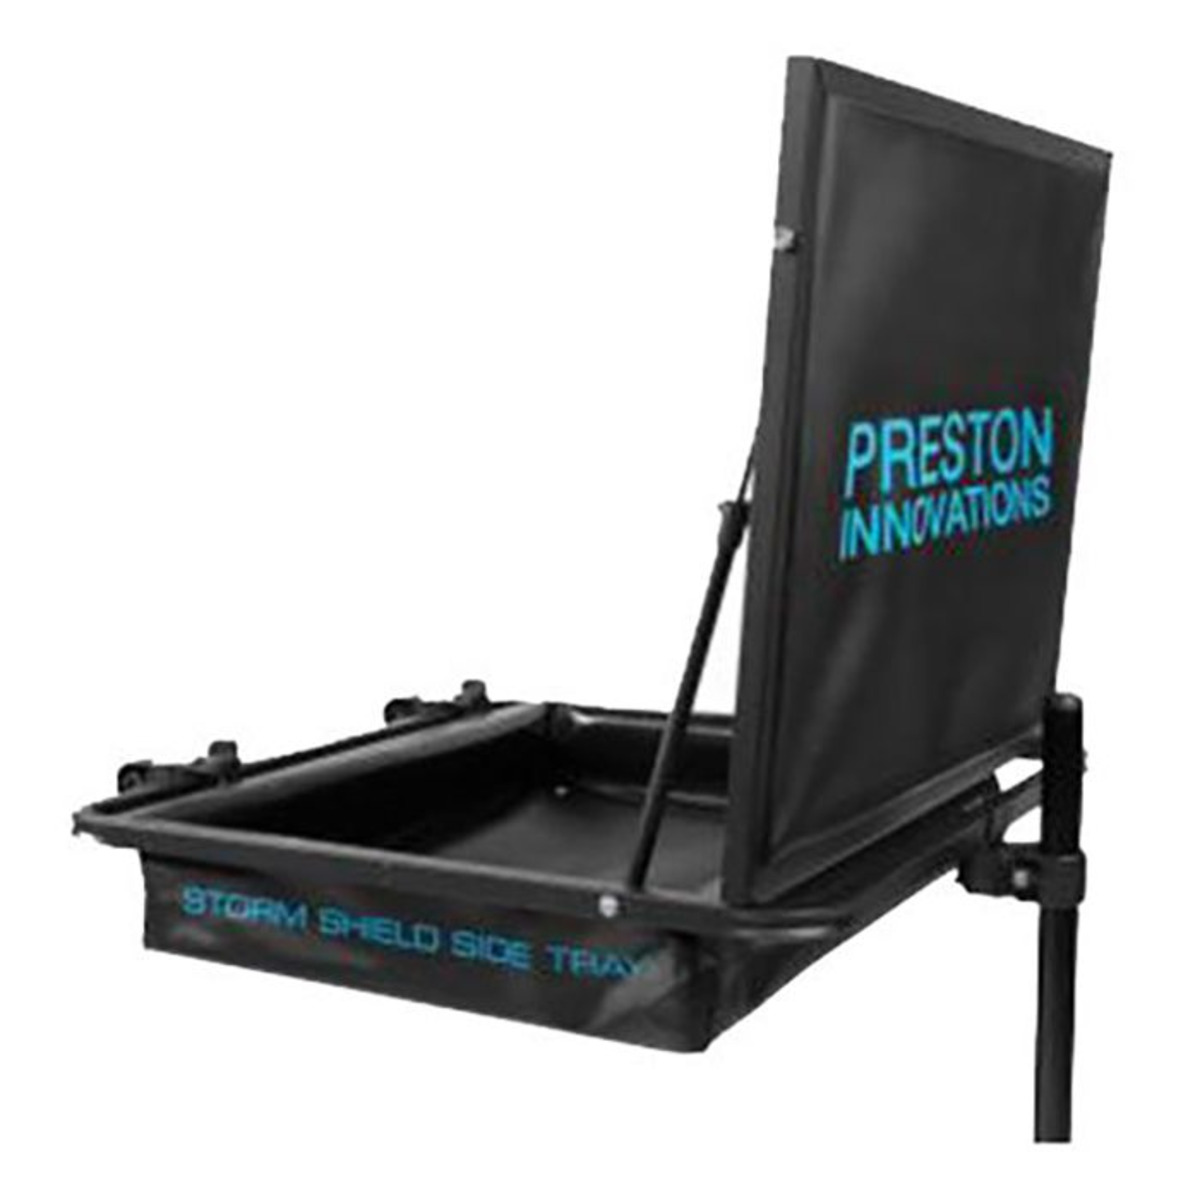 Preston Storm Shield Side Tray - 64x72 cm